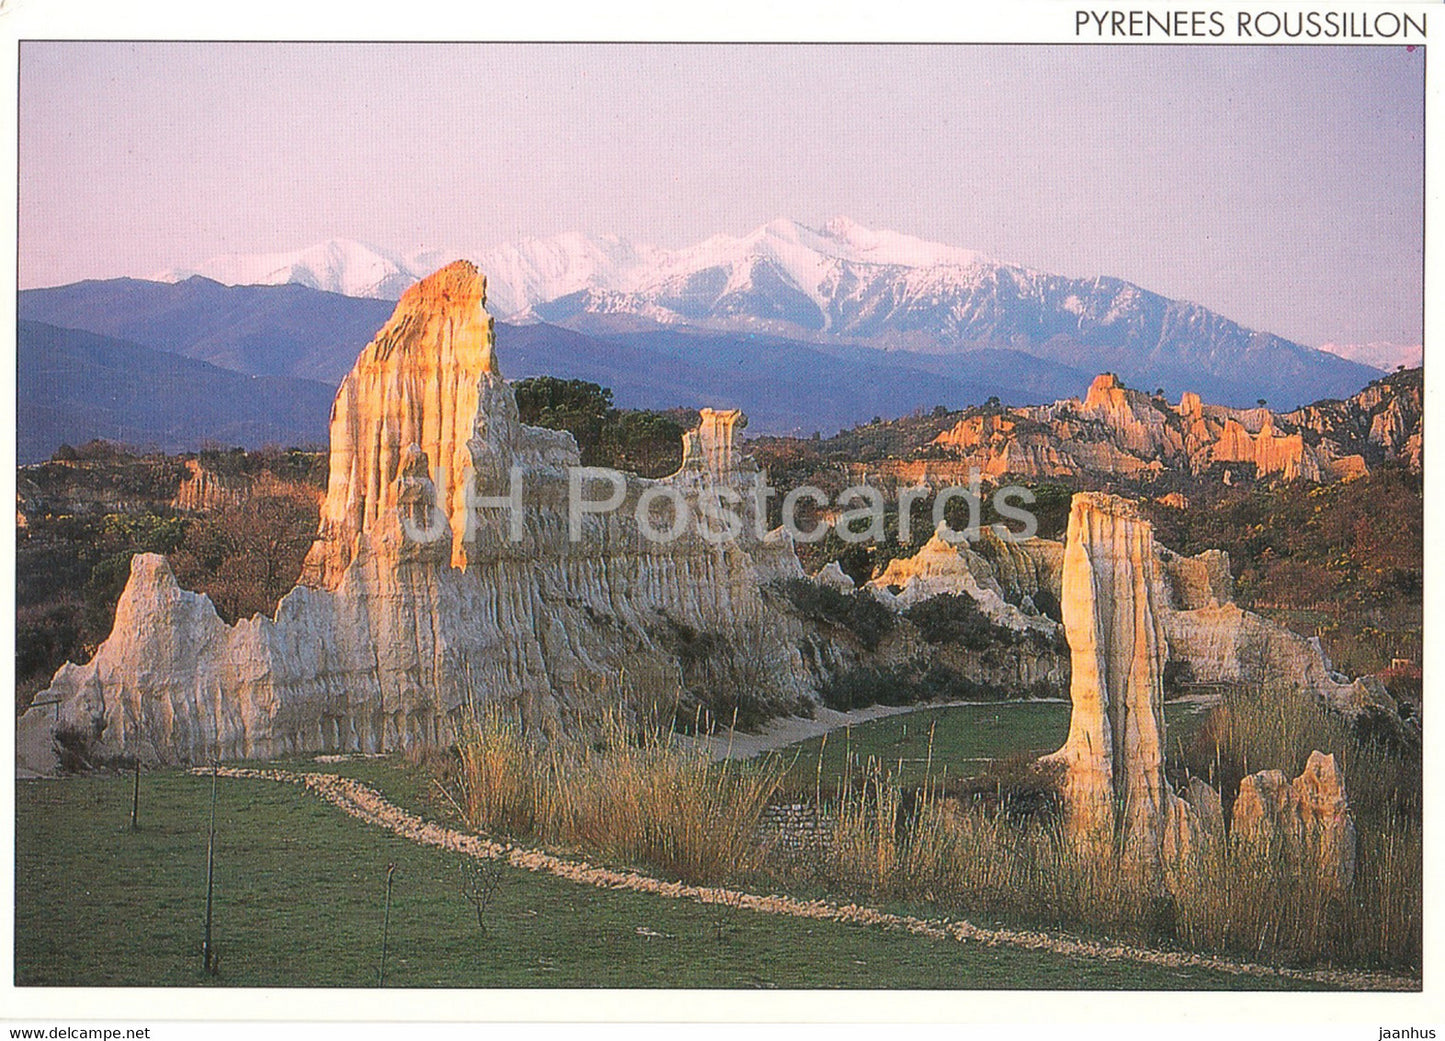 Pyrenees Roussillon - Les Orgues - France - unused - JH Postcards